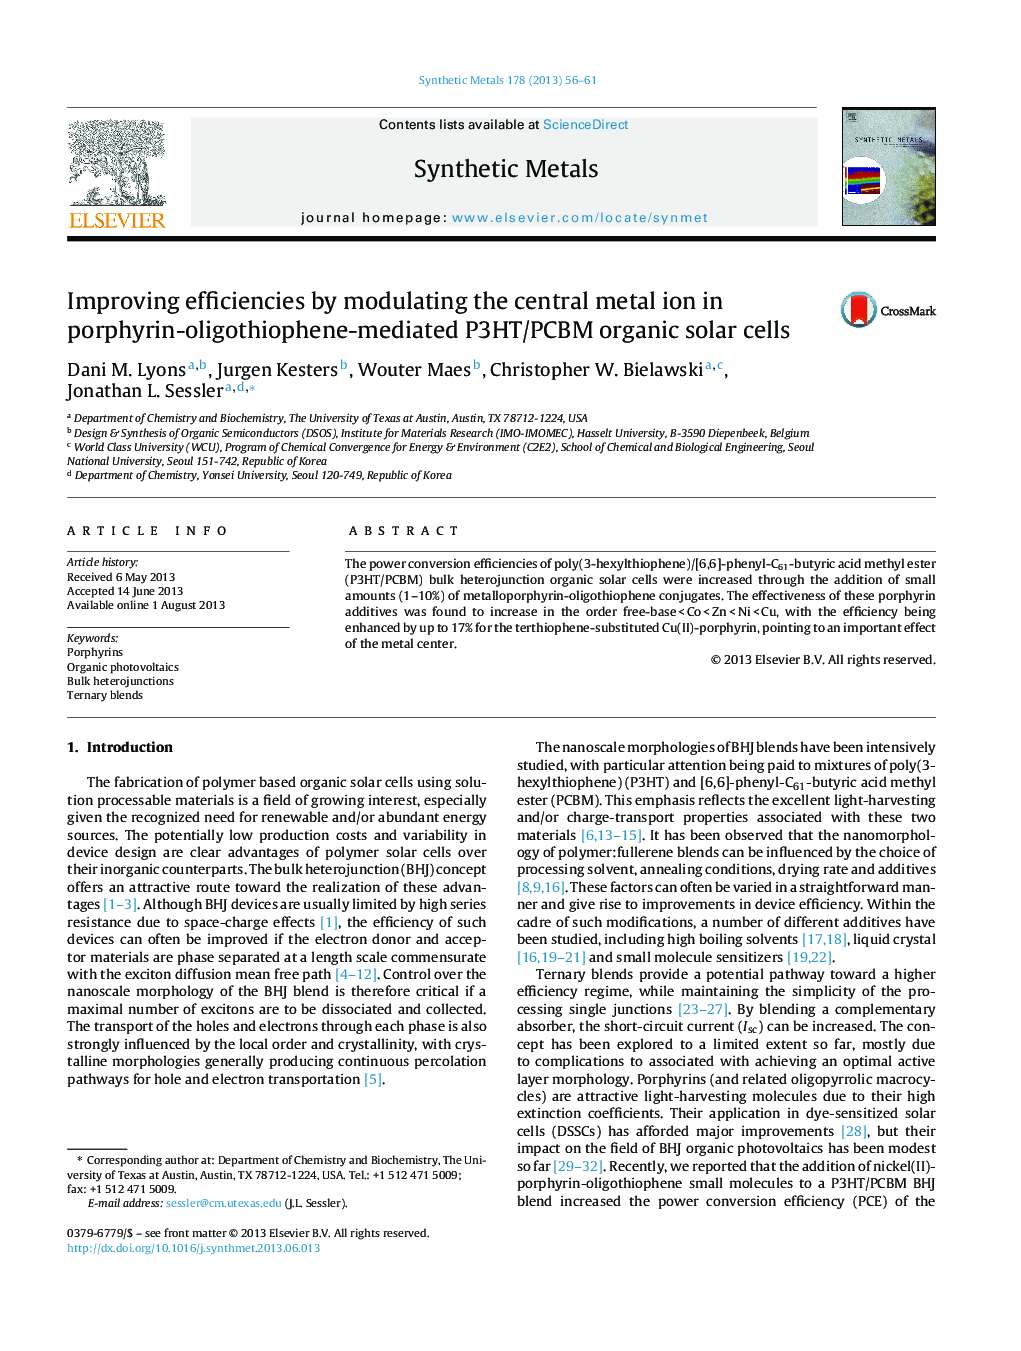 Improving efficiencies by modulating the central metal ion in porphyrin-oligothiophene-mediated P3HT/PCBM organic solar cells